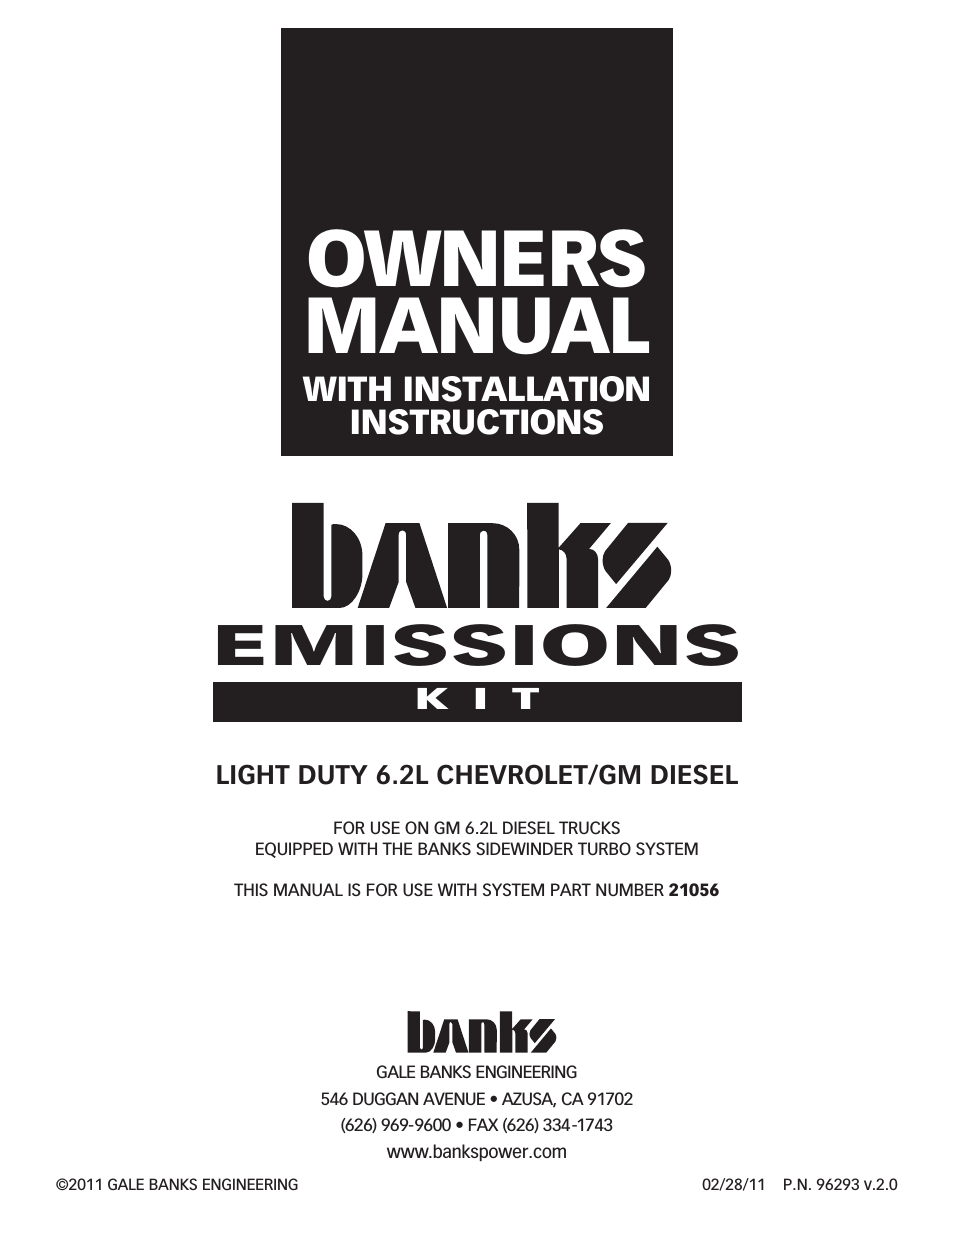 Chevy_GMC Trucks: Diesel ’82 - 93 6.2L Light-duty emissions kit